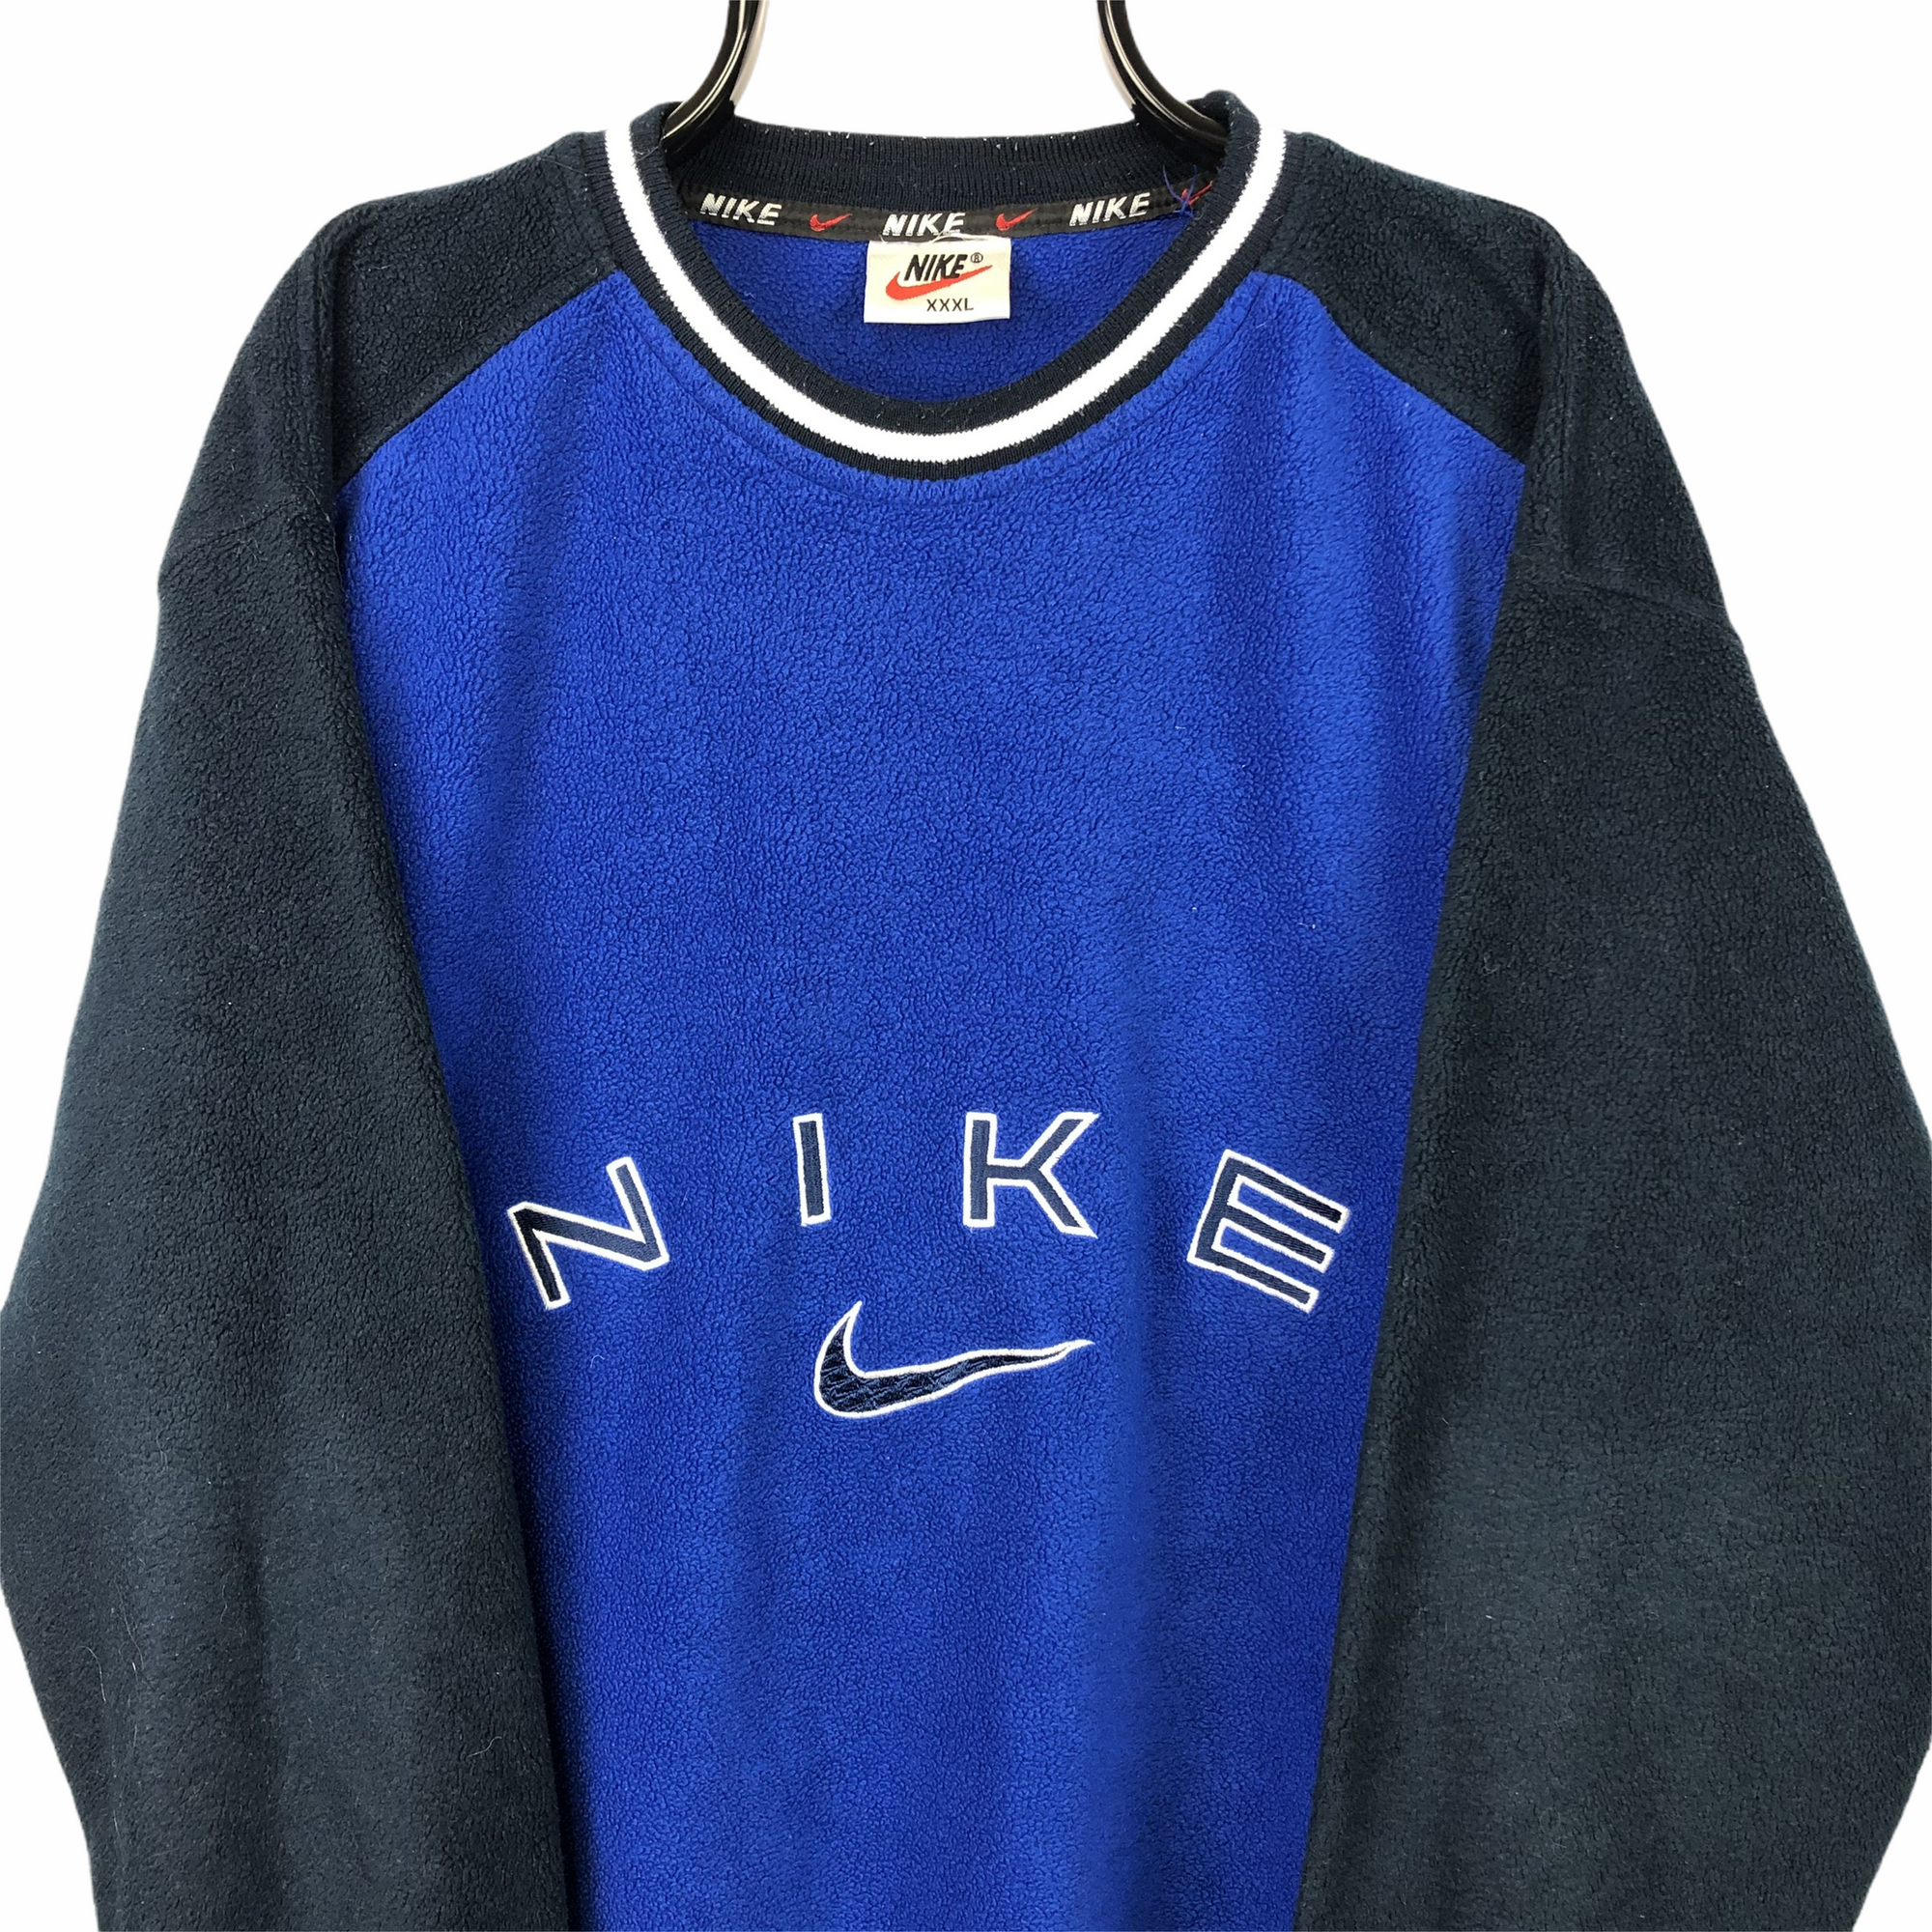 Vintage 90s Nike Spellout Fleece Sweatshirt in Blue & Navy - Men's XL/Women's XXL